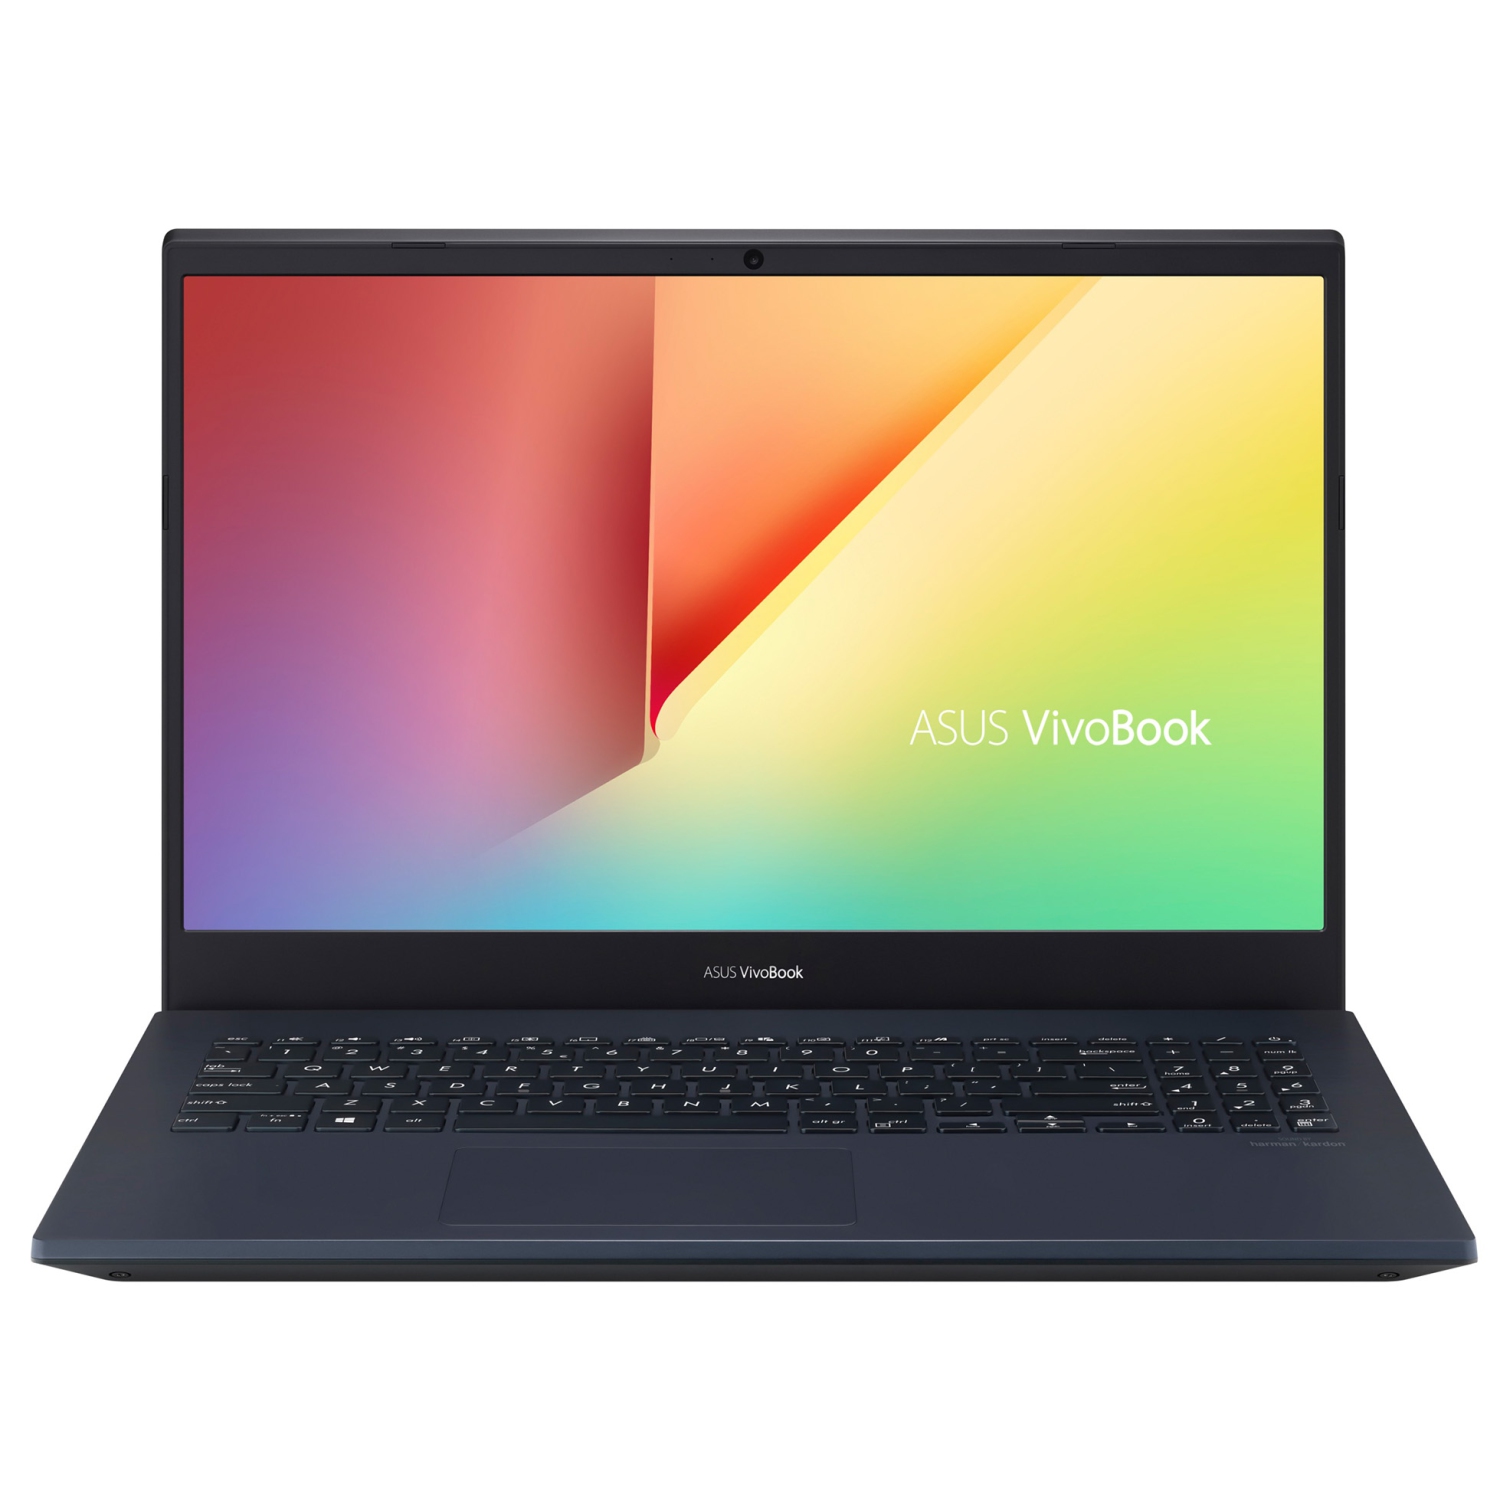 Custom ASUS VivoBook Laptop (Intel i5-10300H, 20GB RAM, 1TB PCIe SSD, NVIDIA GTX 1650, 15.6" Full HD (1920x1080), Win 10 Pro)